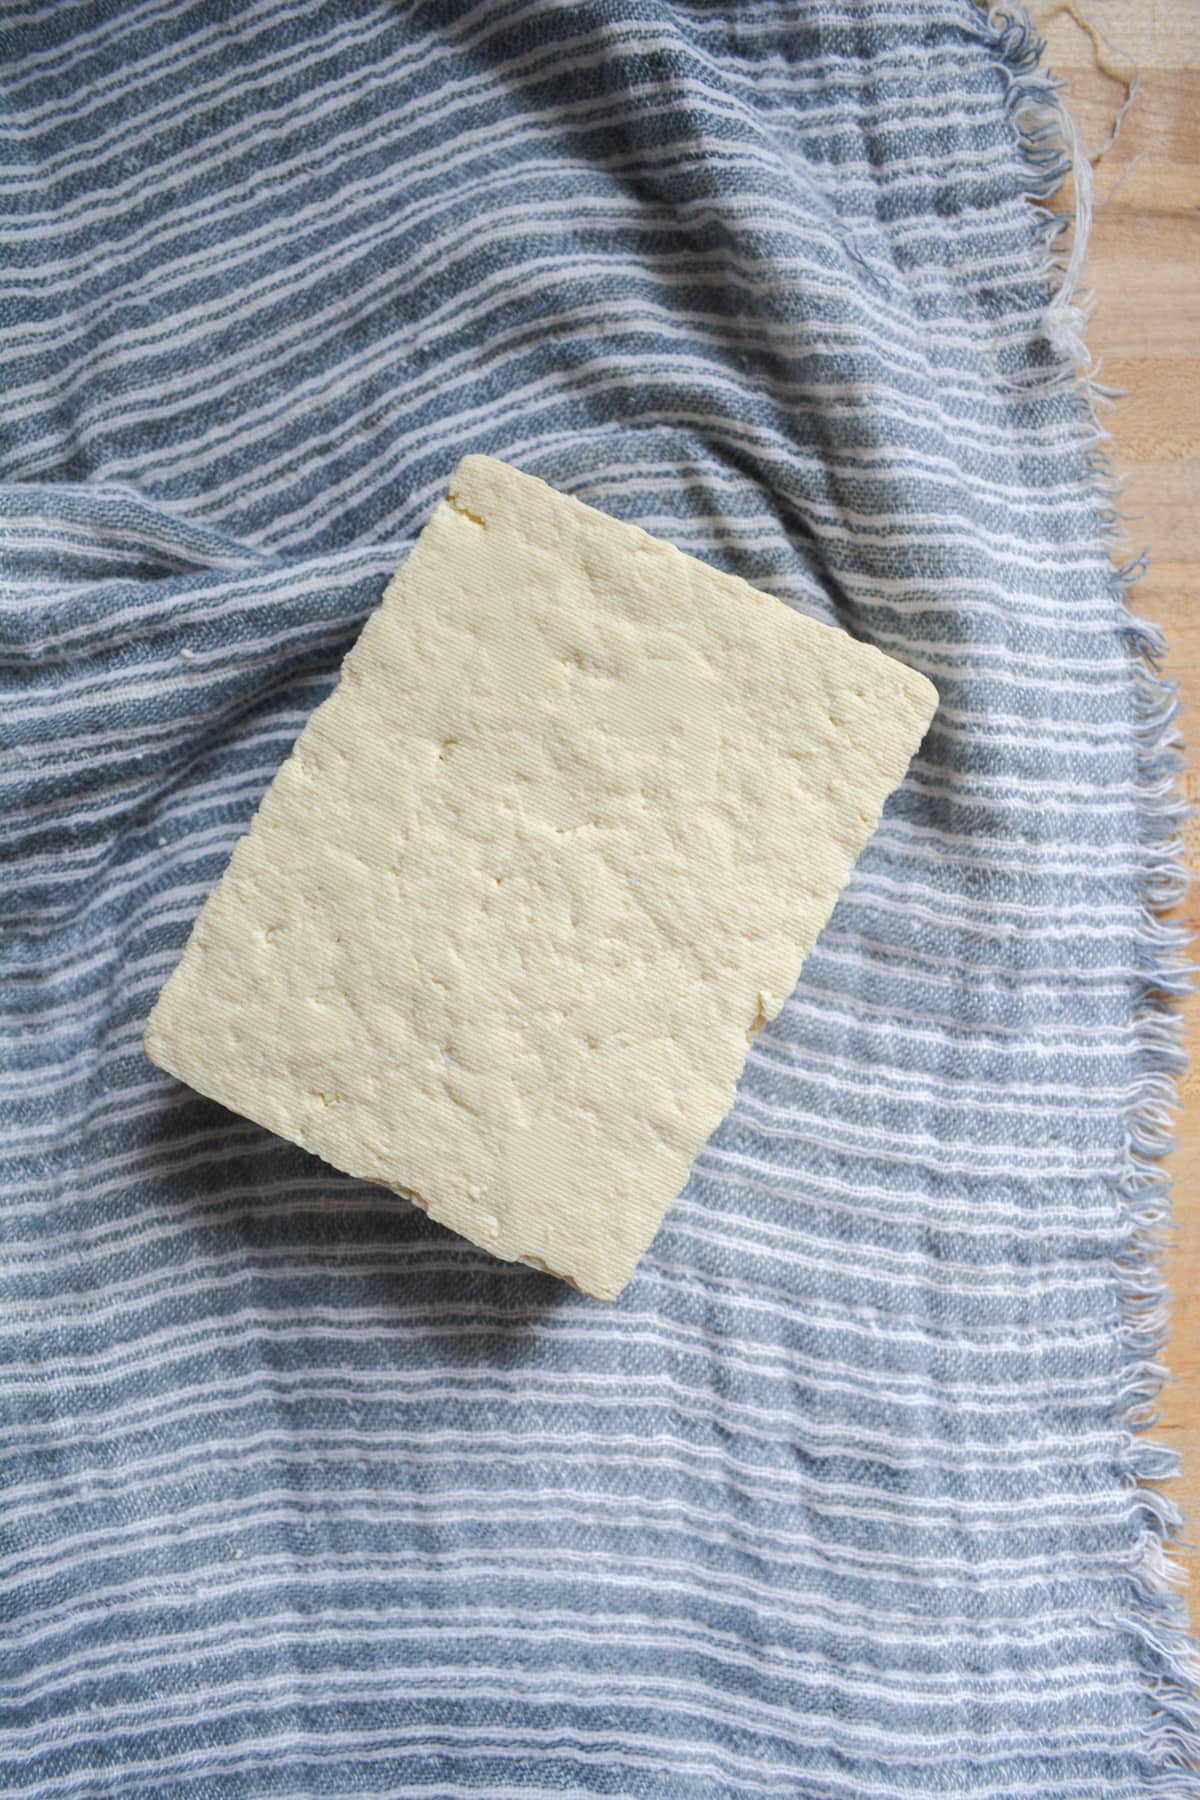 Block of tofu on a kitchen towel.